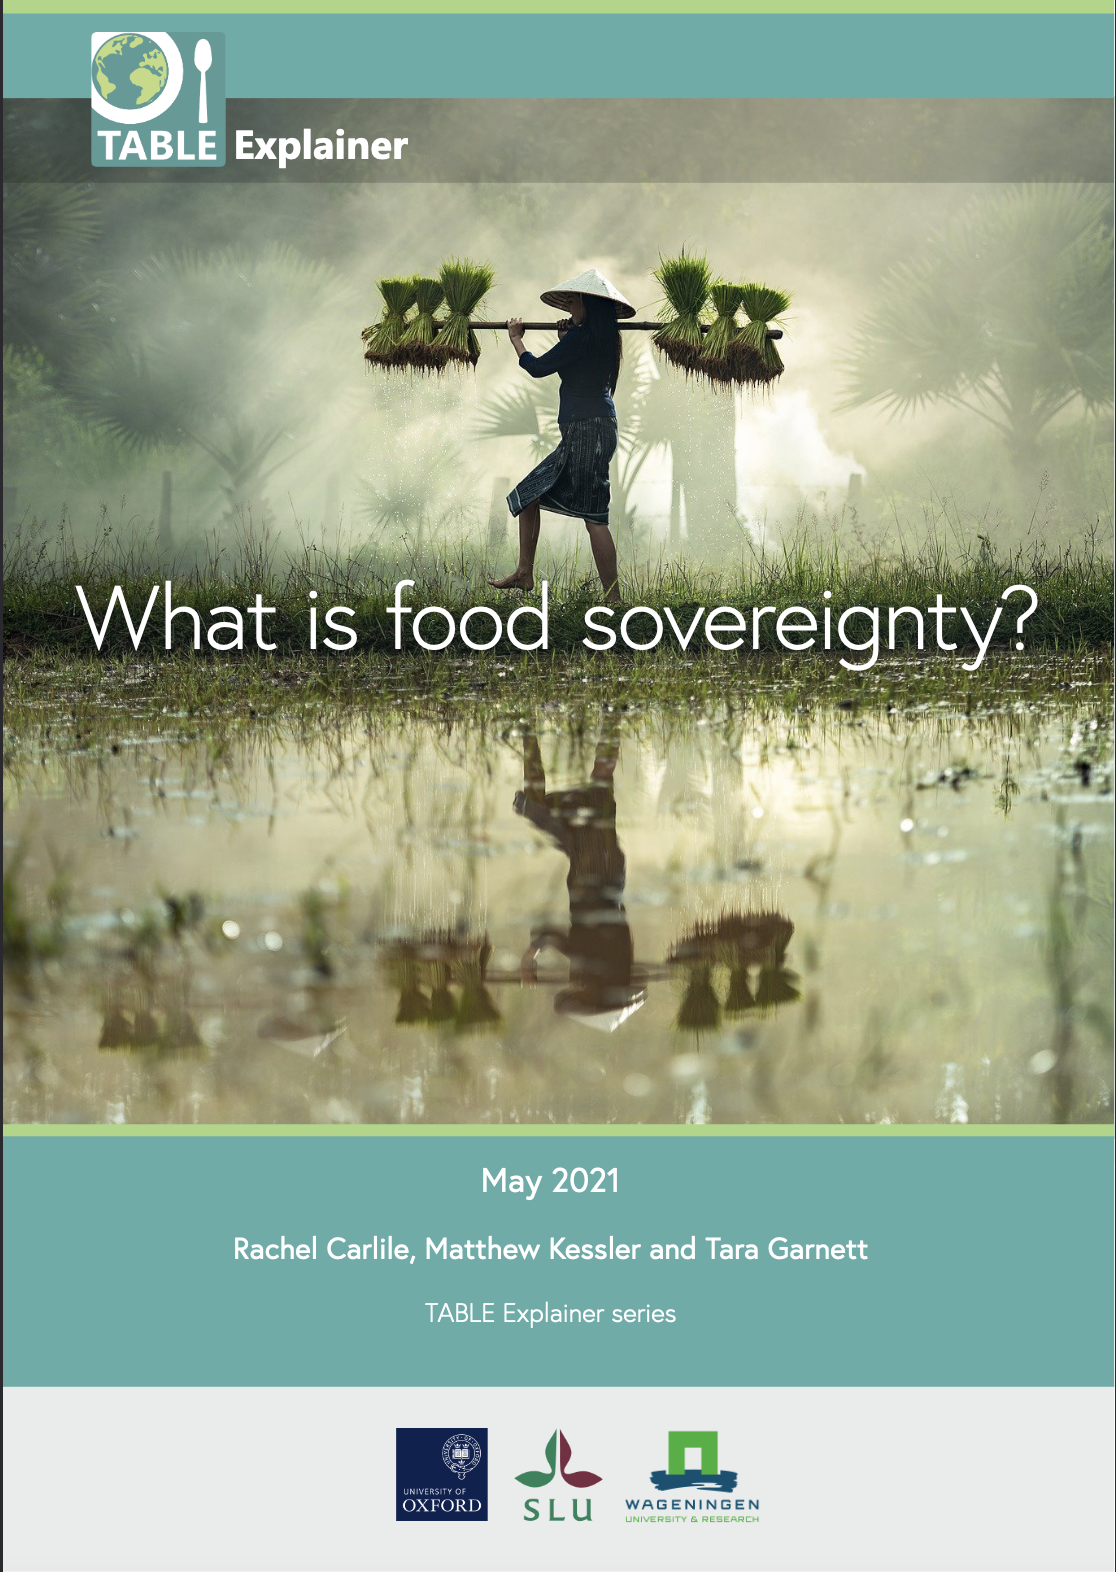 The cover of the TABLE explainer "What is food sovereignty?" by Rachel Calile, Matthew Kessler, and Tara Garnett.